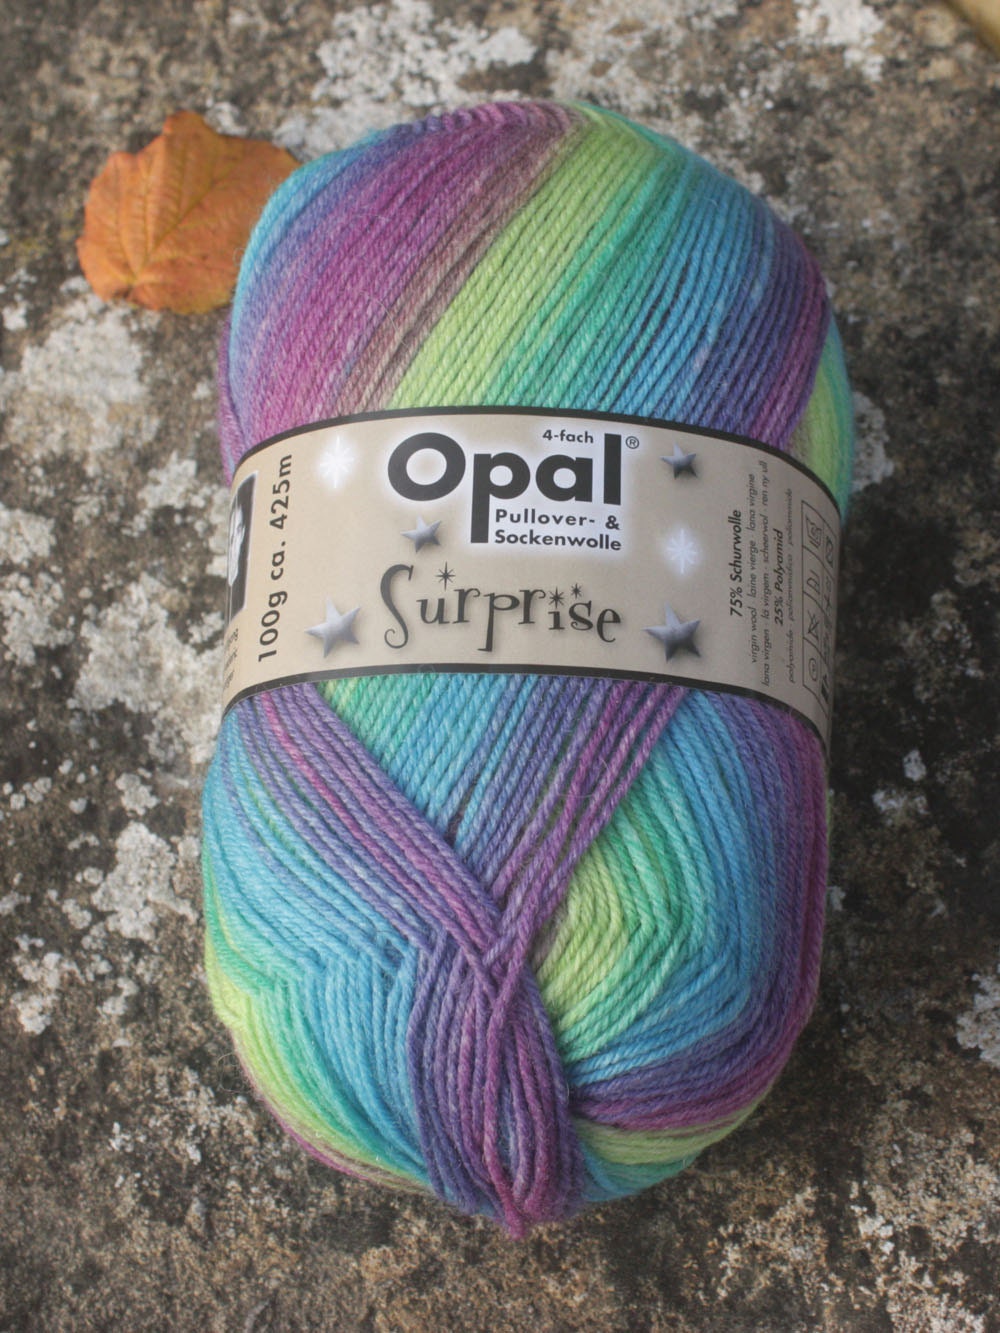 Opal Surprise Rainbow 4 Sock - Etsy